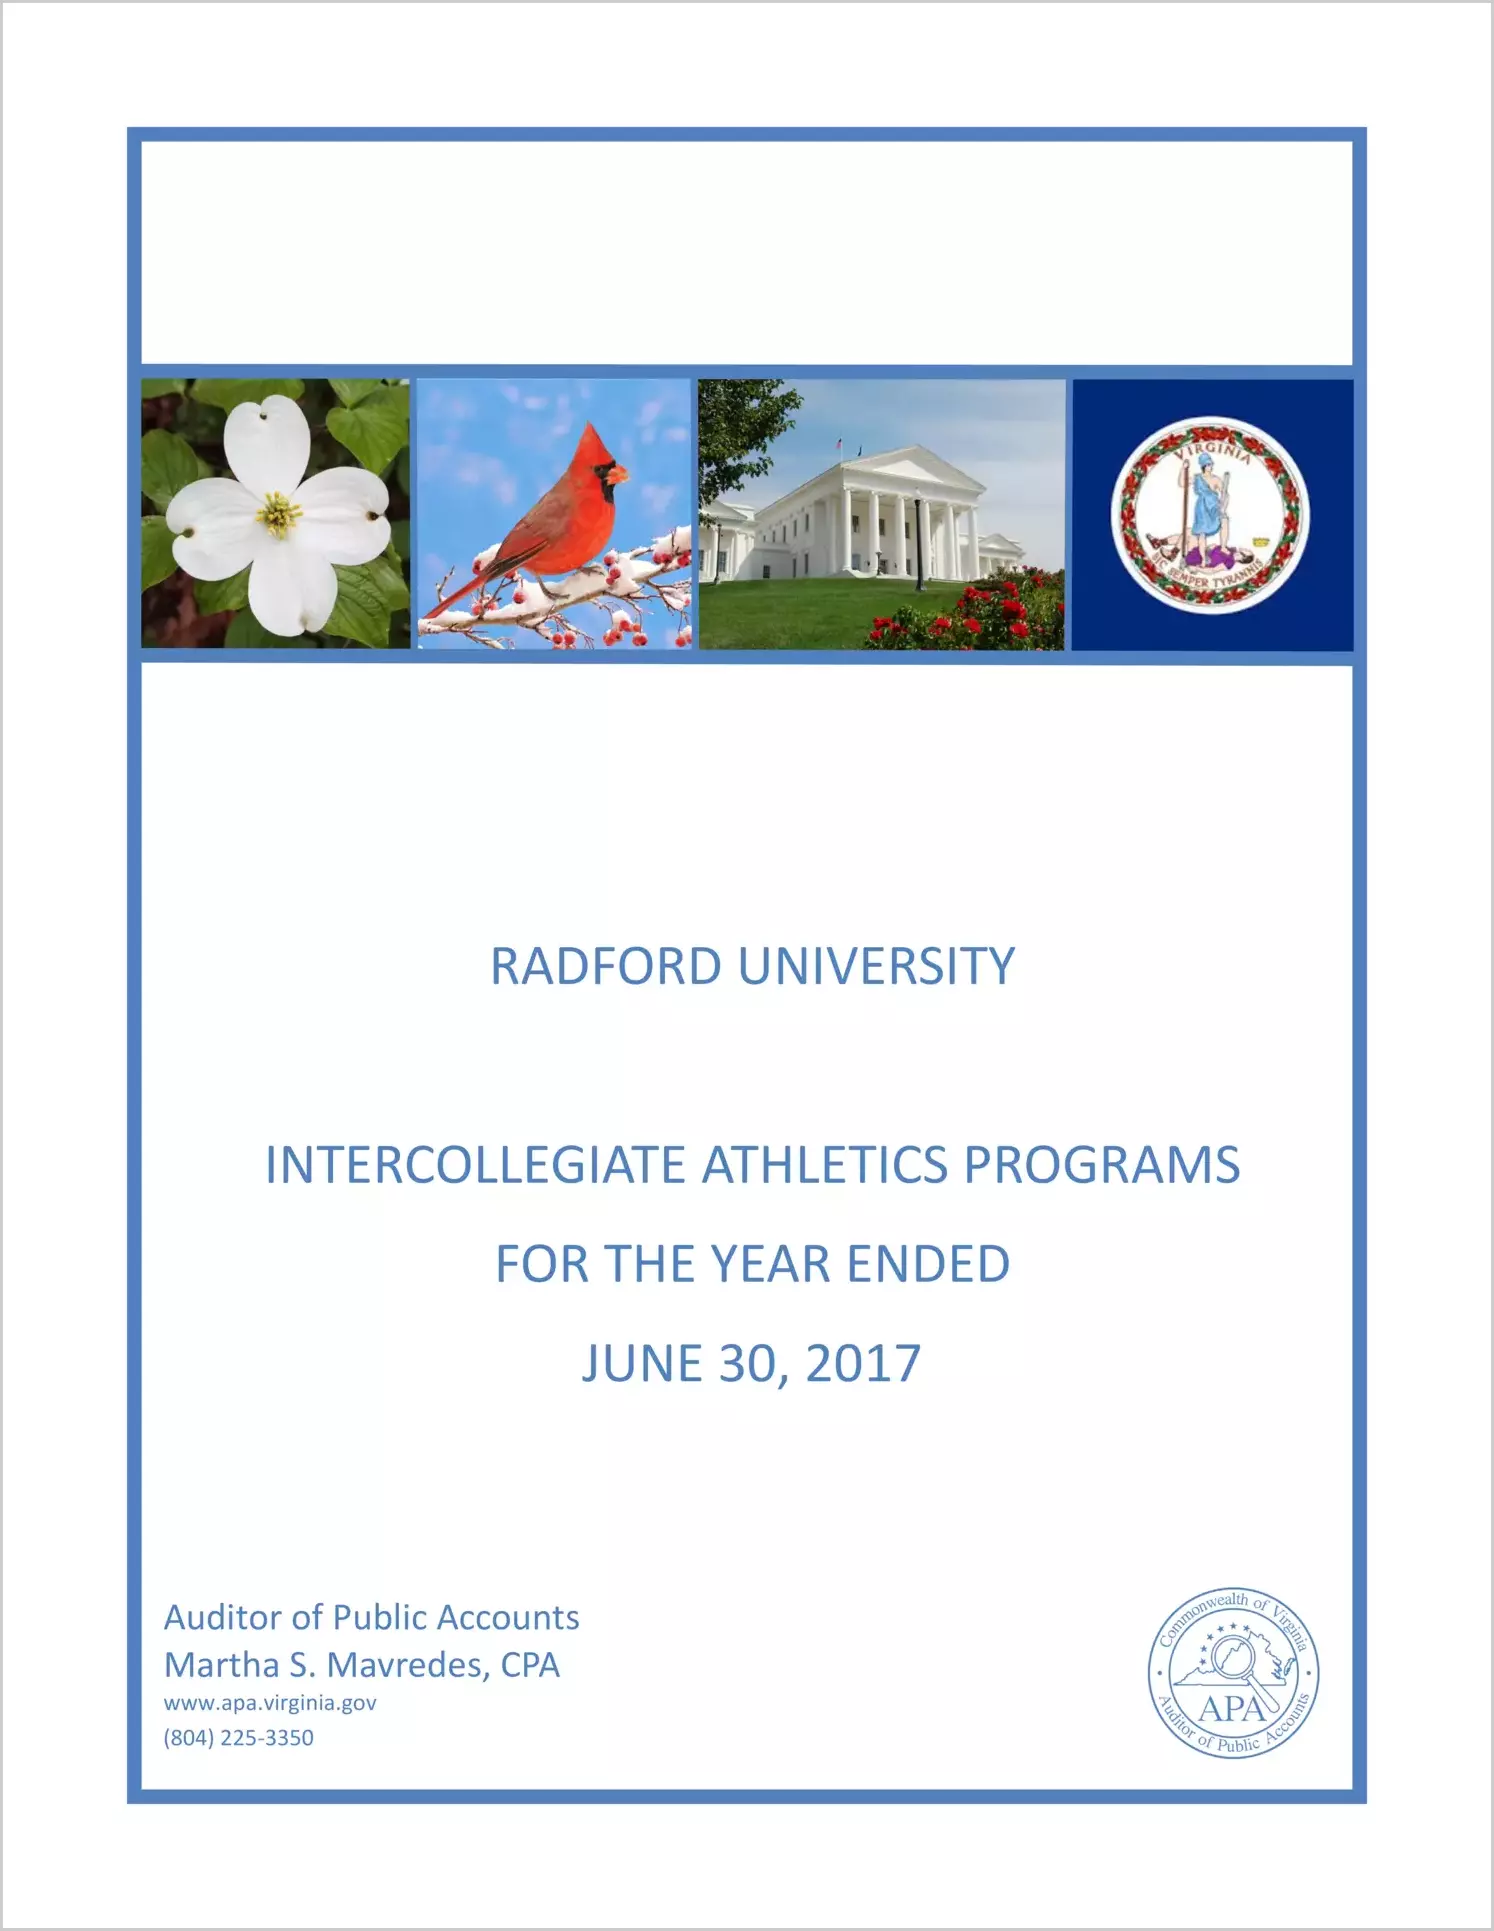 Radford University Intercollegiate Athletics Programs for the year ended June 30, 2017